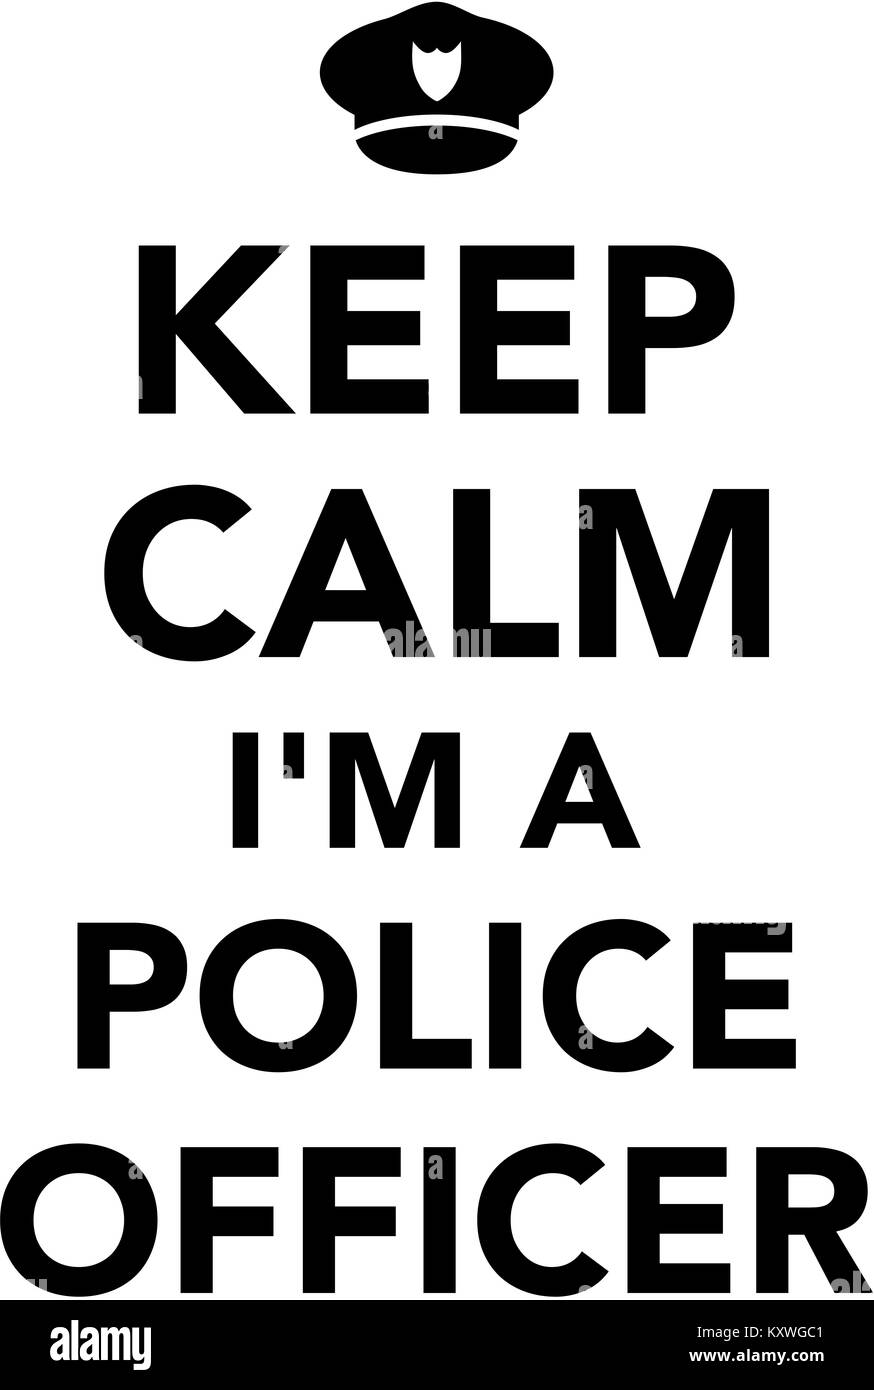 Keep calm I am a police officer Stock Photo - Alamy